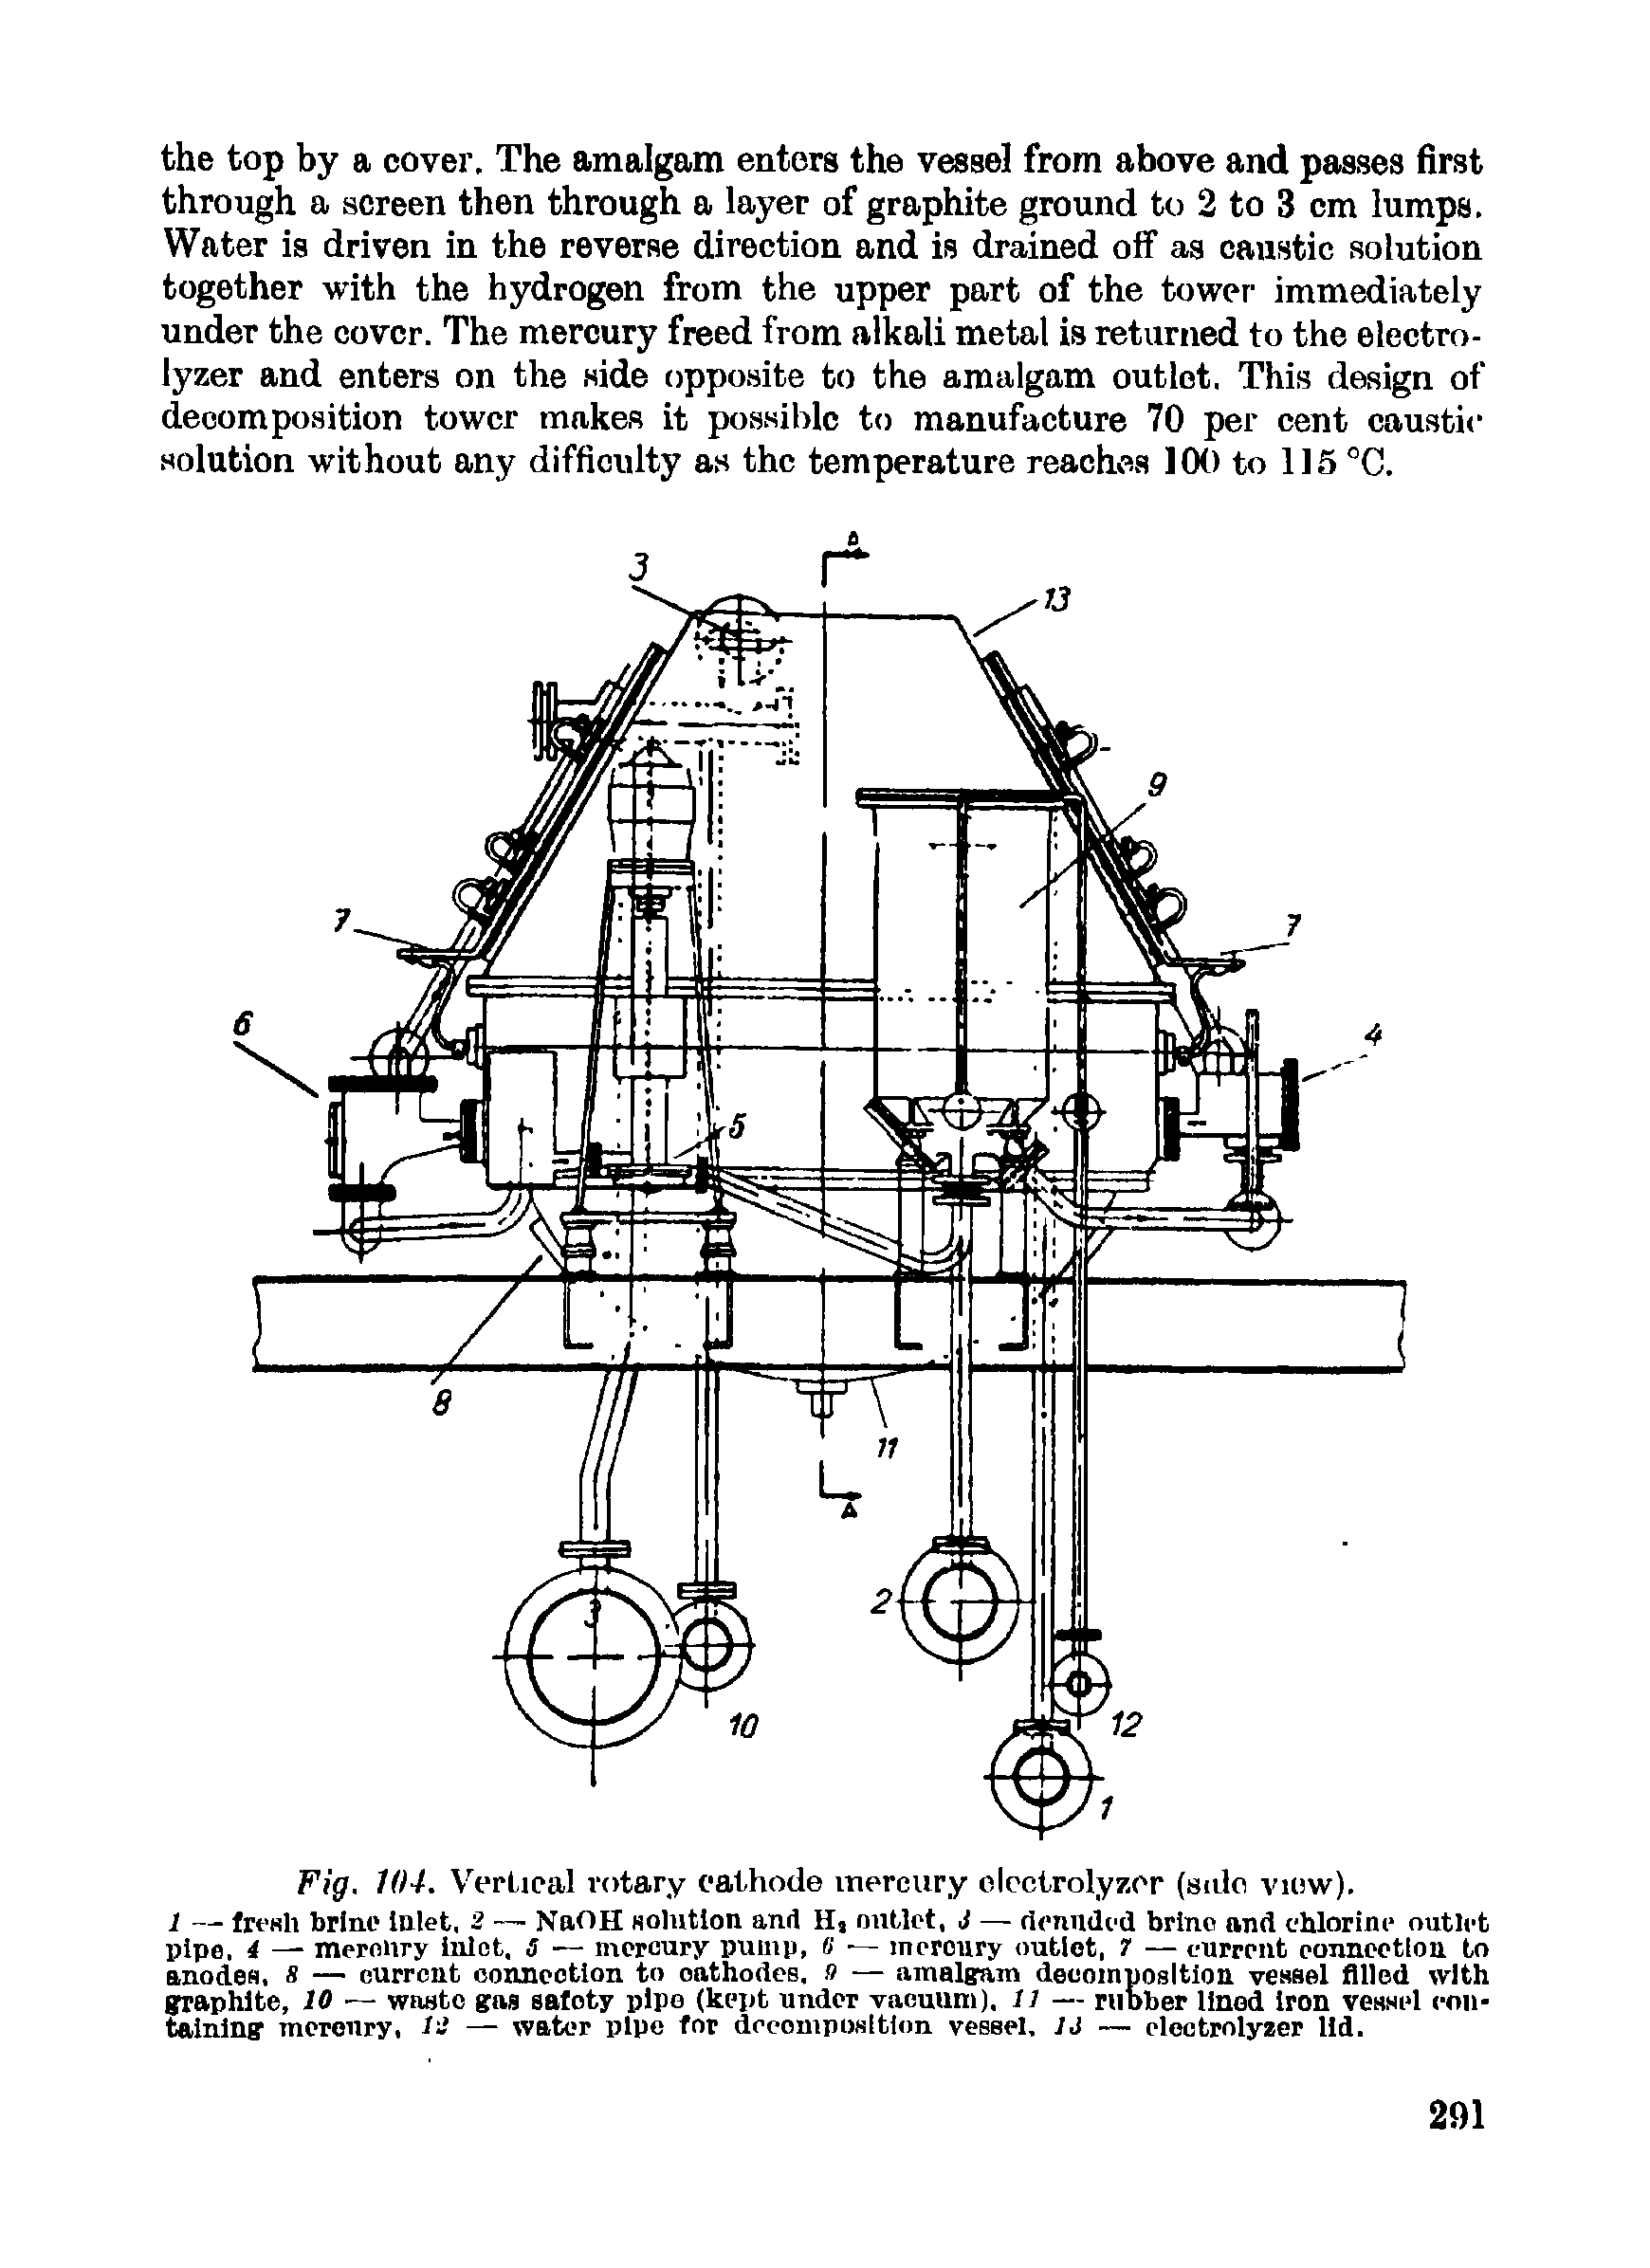 Fig. W4. Vertical votary cathode mercury electrolyzer (side view).